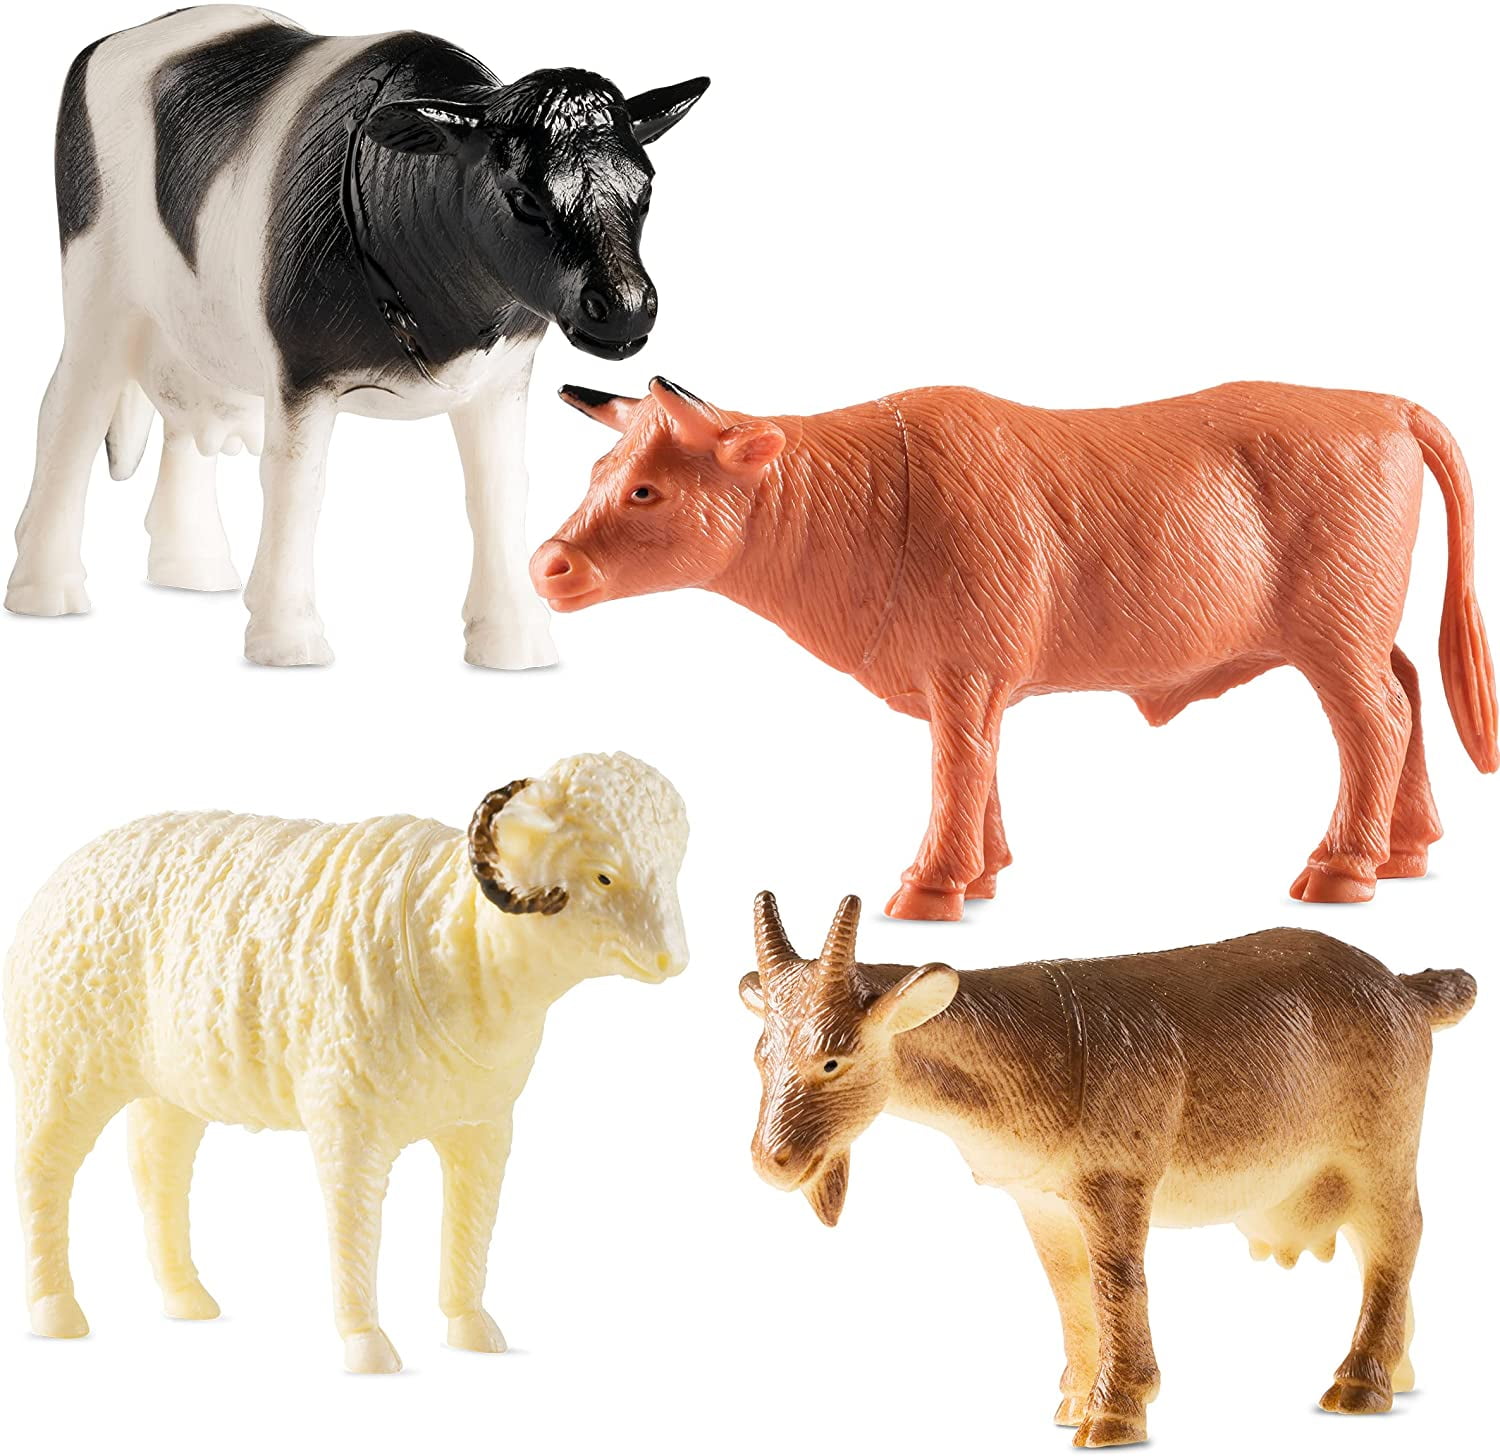 Details about   Kids Lifelike Farm Animal Figure Plastic Farm Animals Toy Set Farmer & Cows 